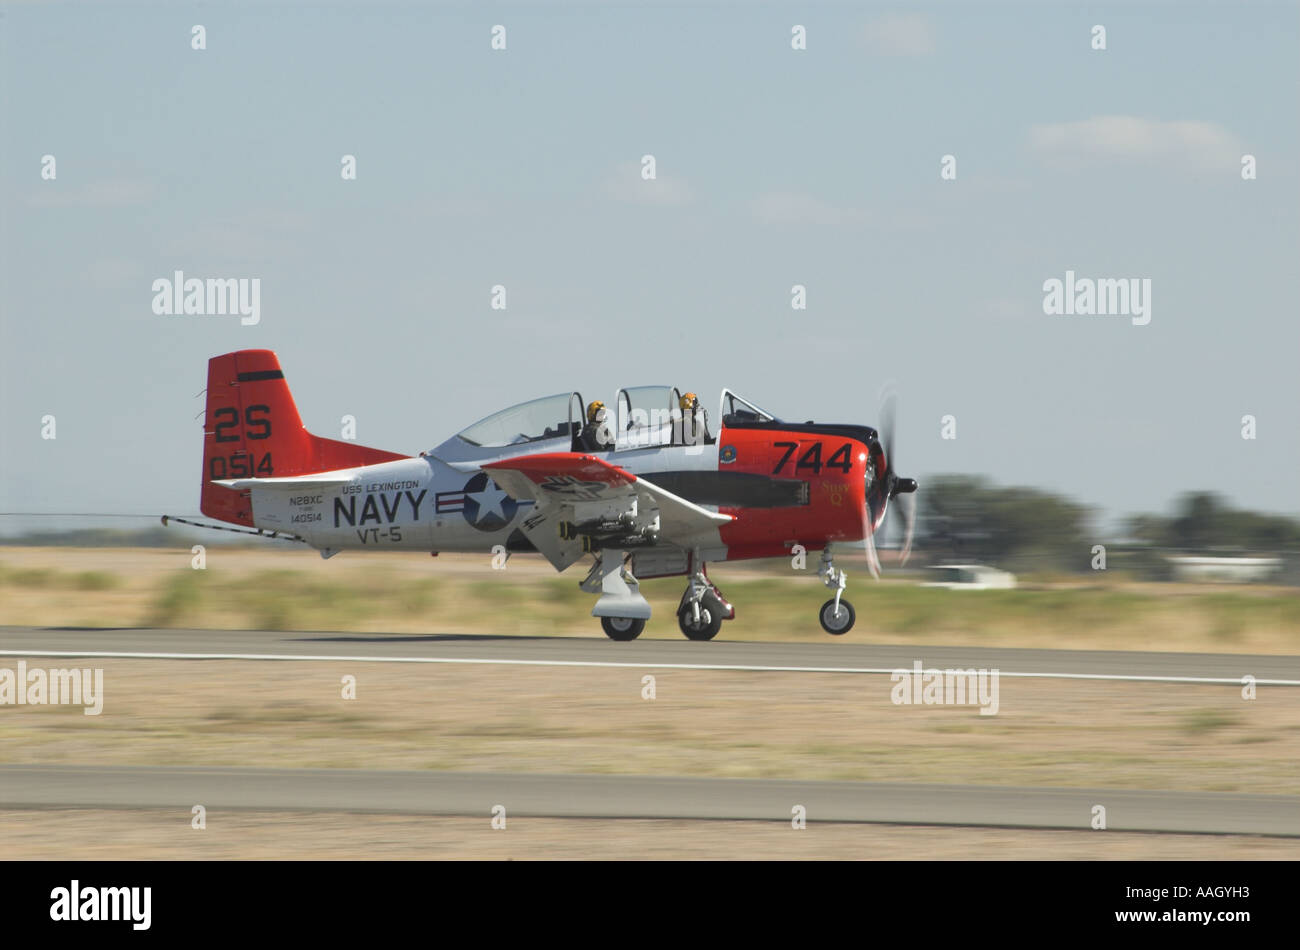 A T-28 Trojan aircraft at an air show, landing. Stock Photo